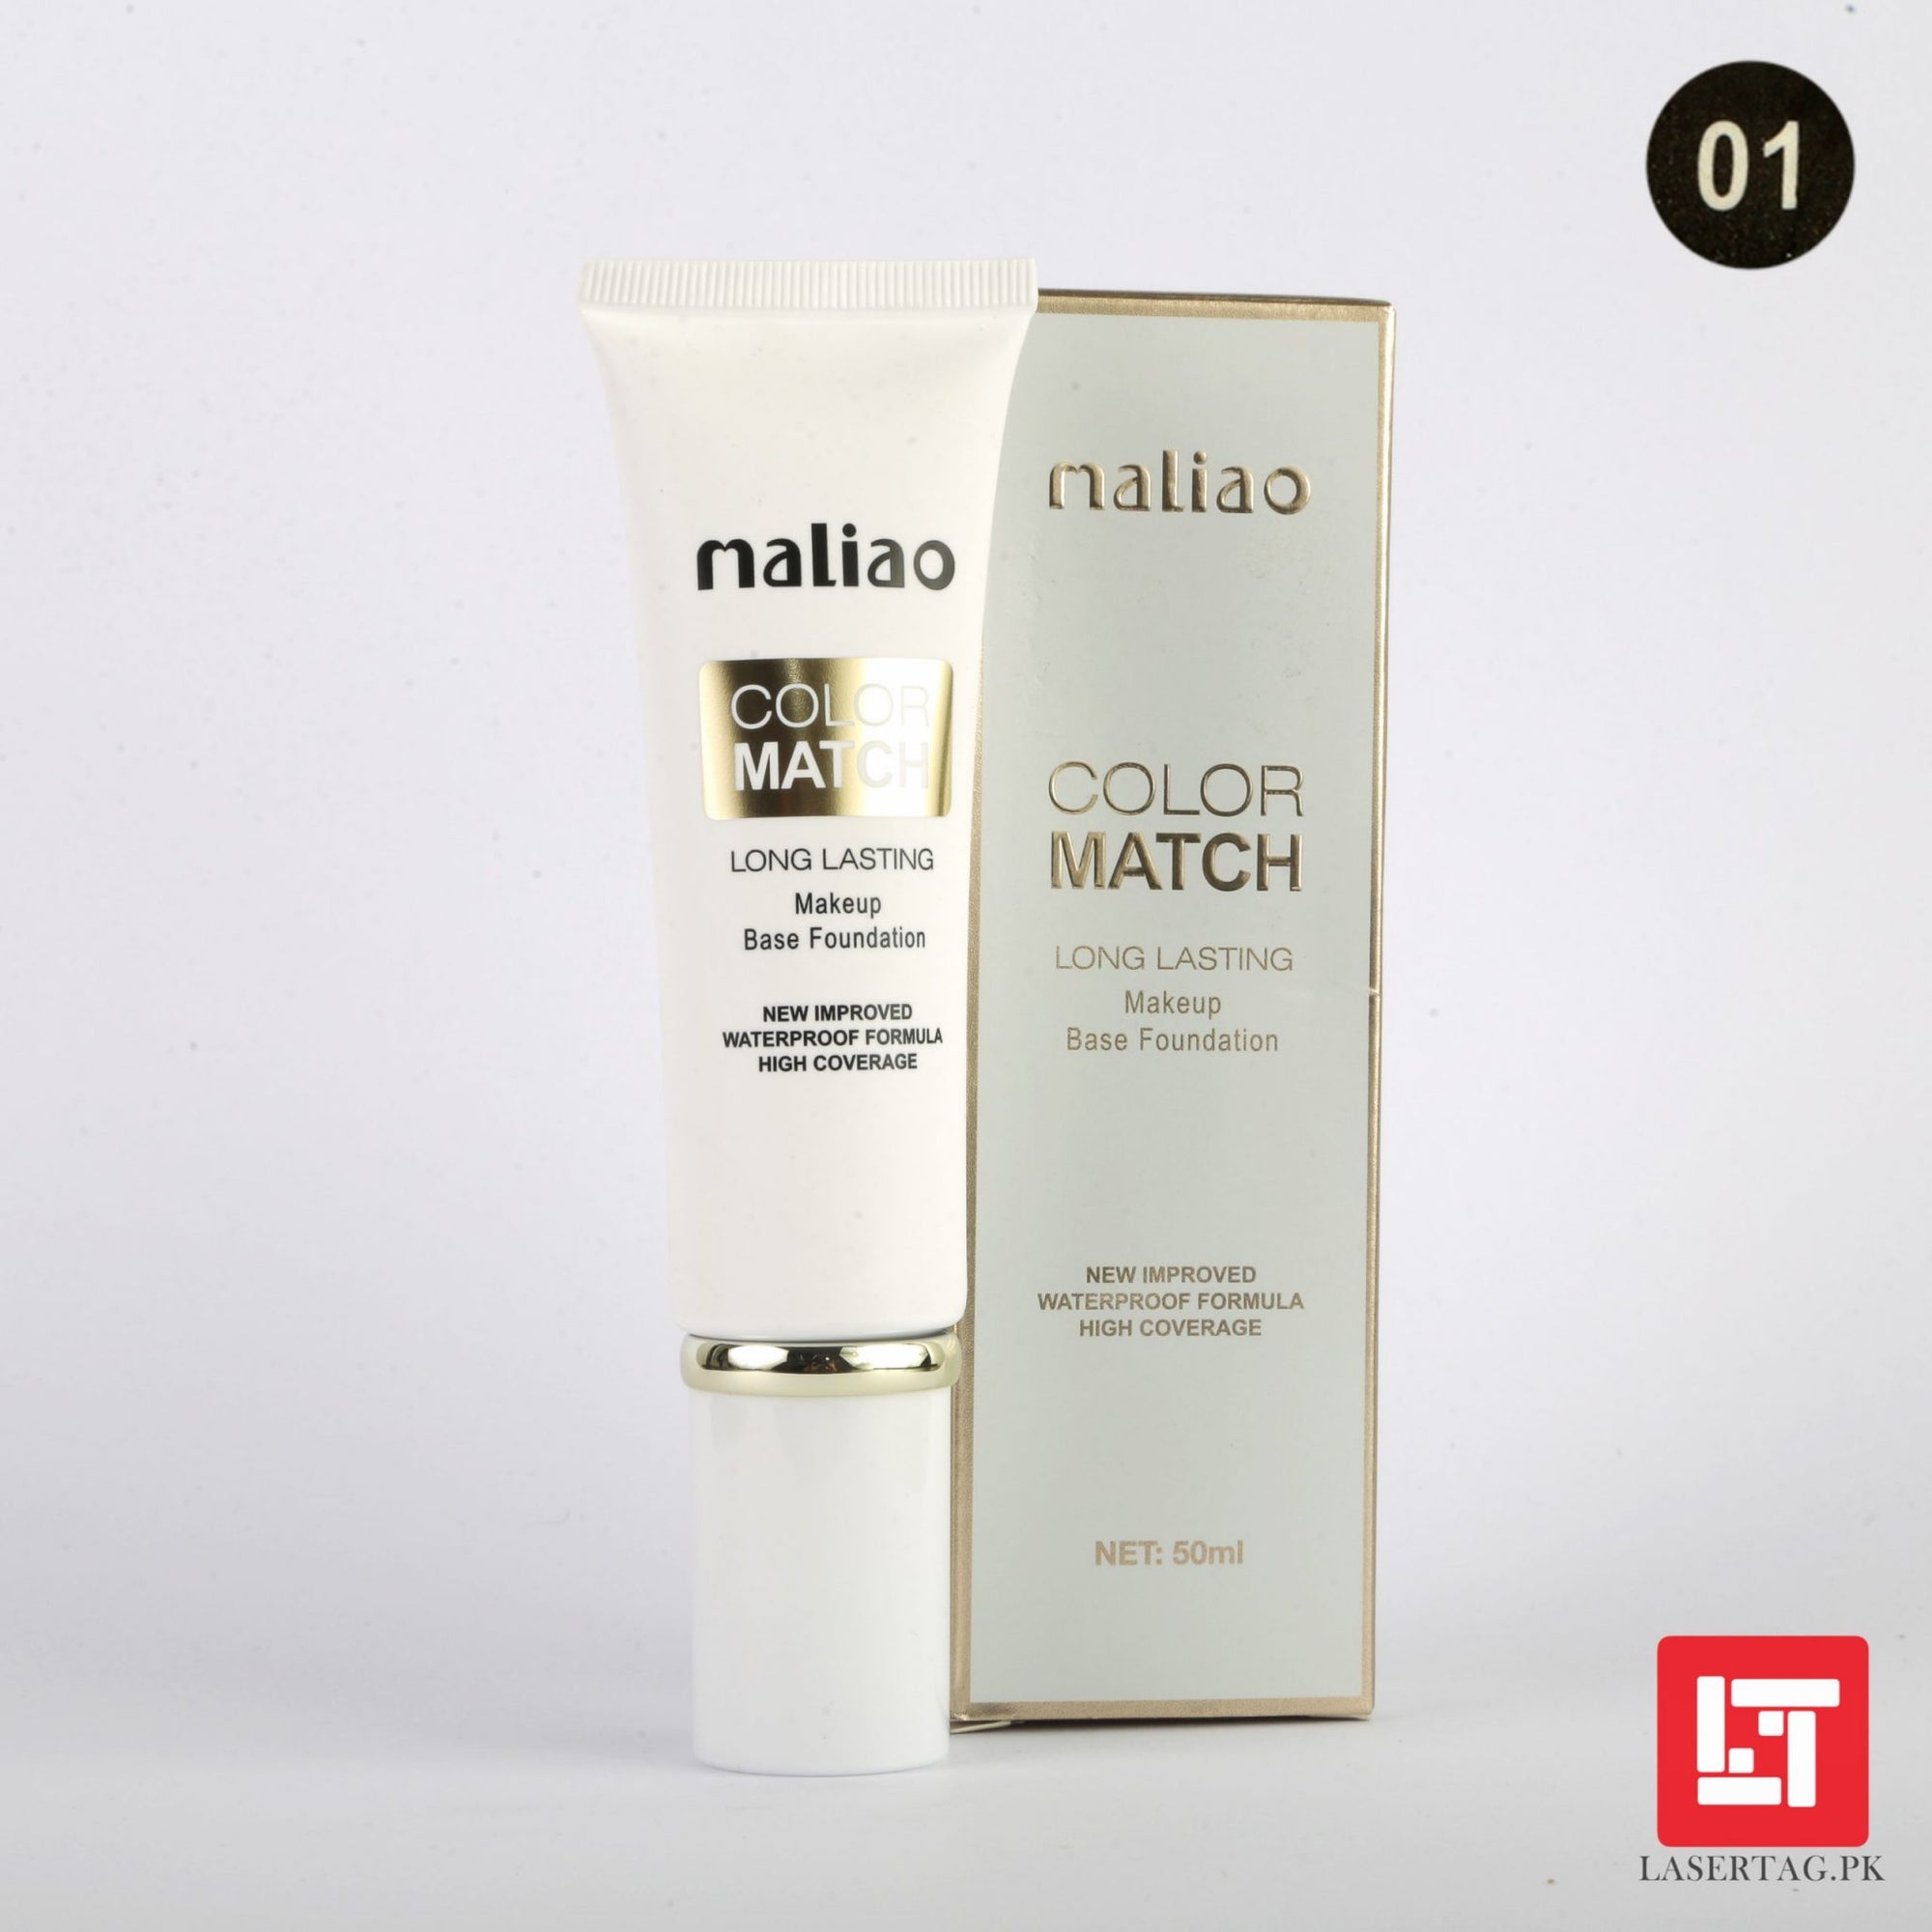 Maliao Color Match Long Lasting Makeup Base Foundation New Improved Waterproof Formula M109-01 50ml freeshipping - lasertag.pk